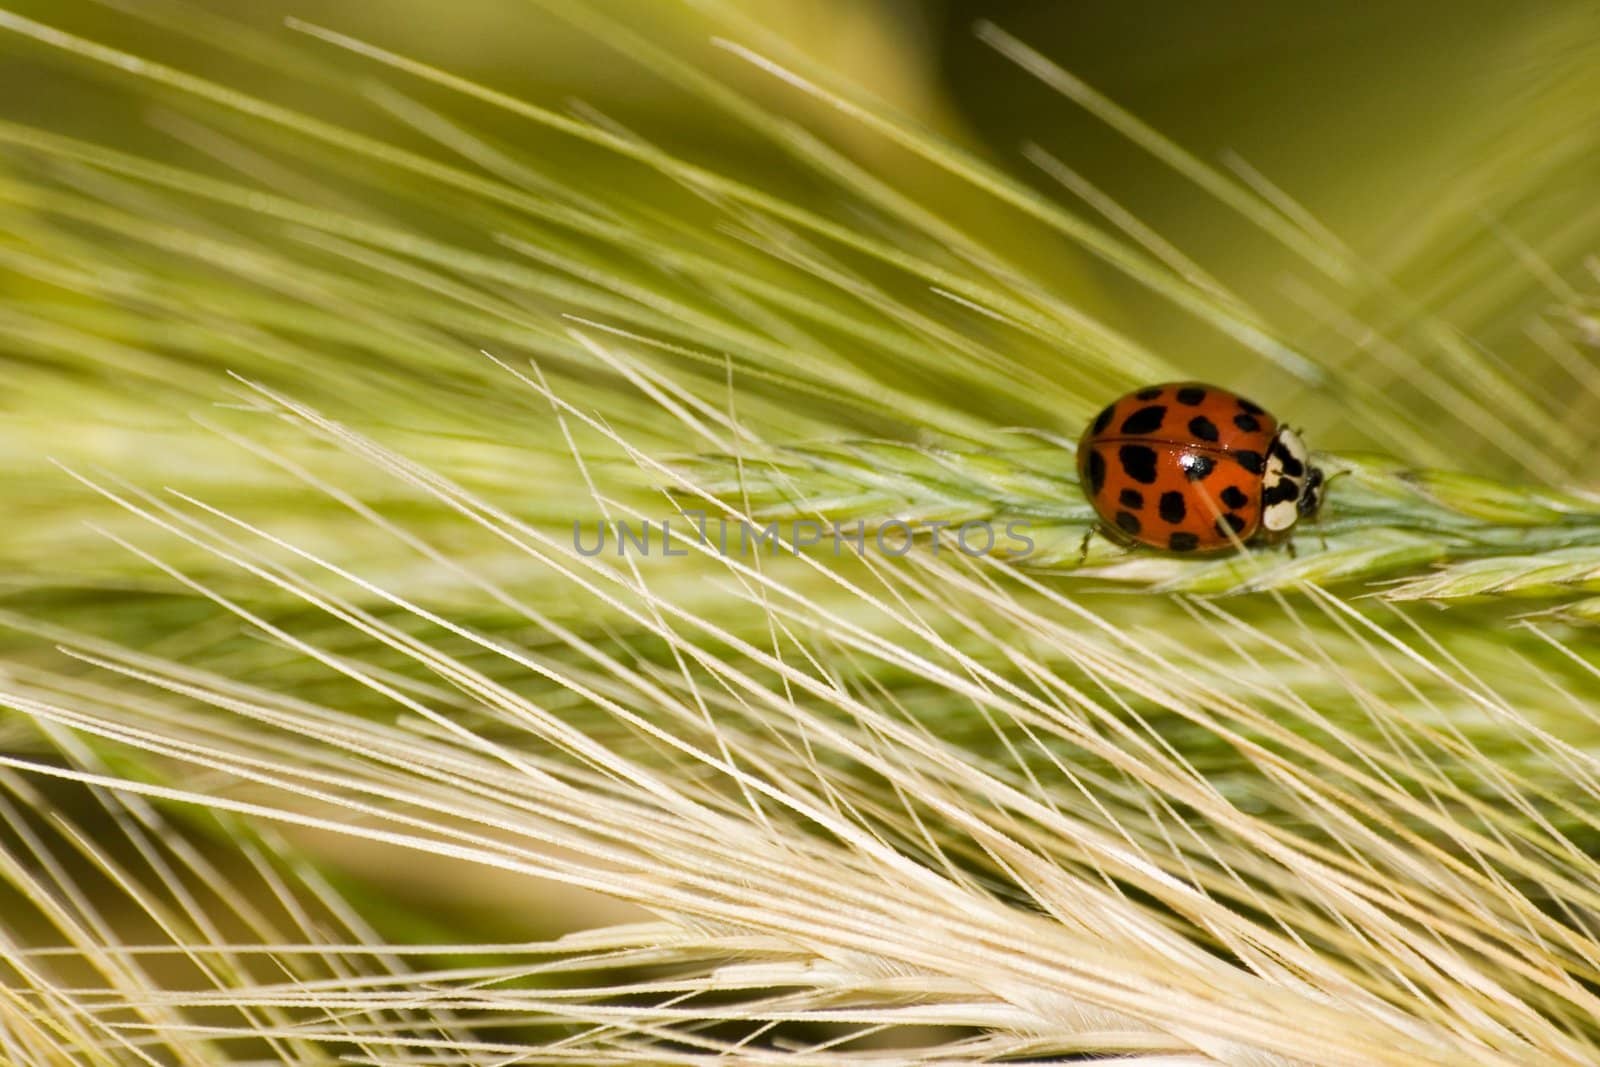 Ladybug on a grass stalk, macro photography